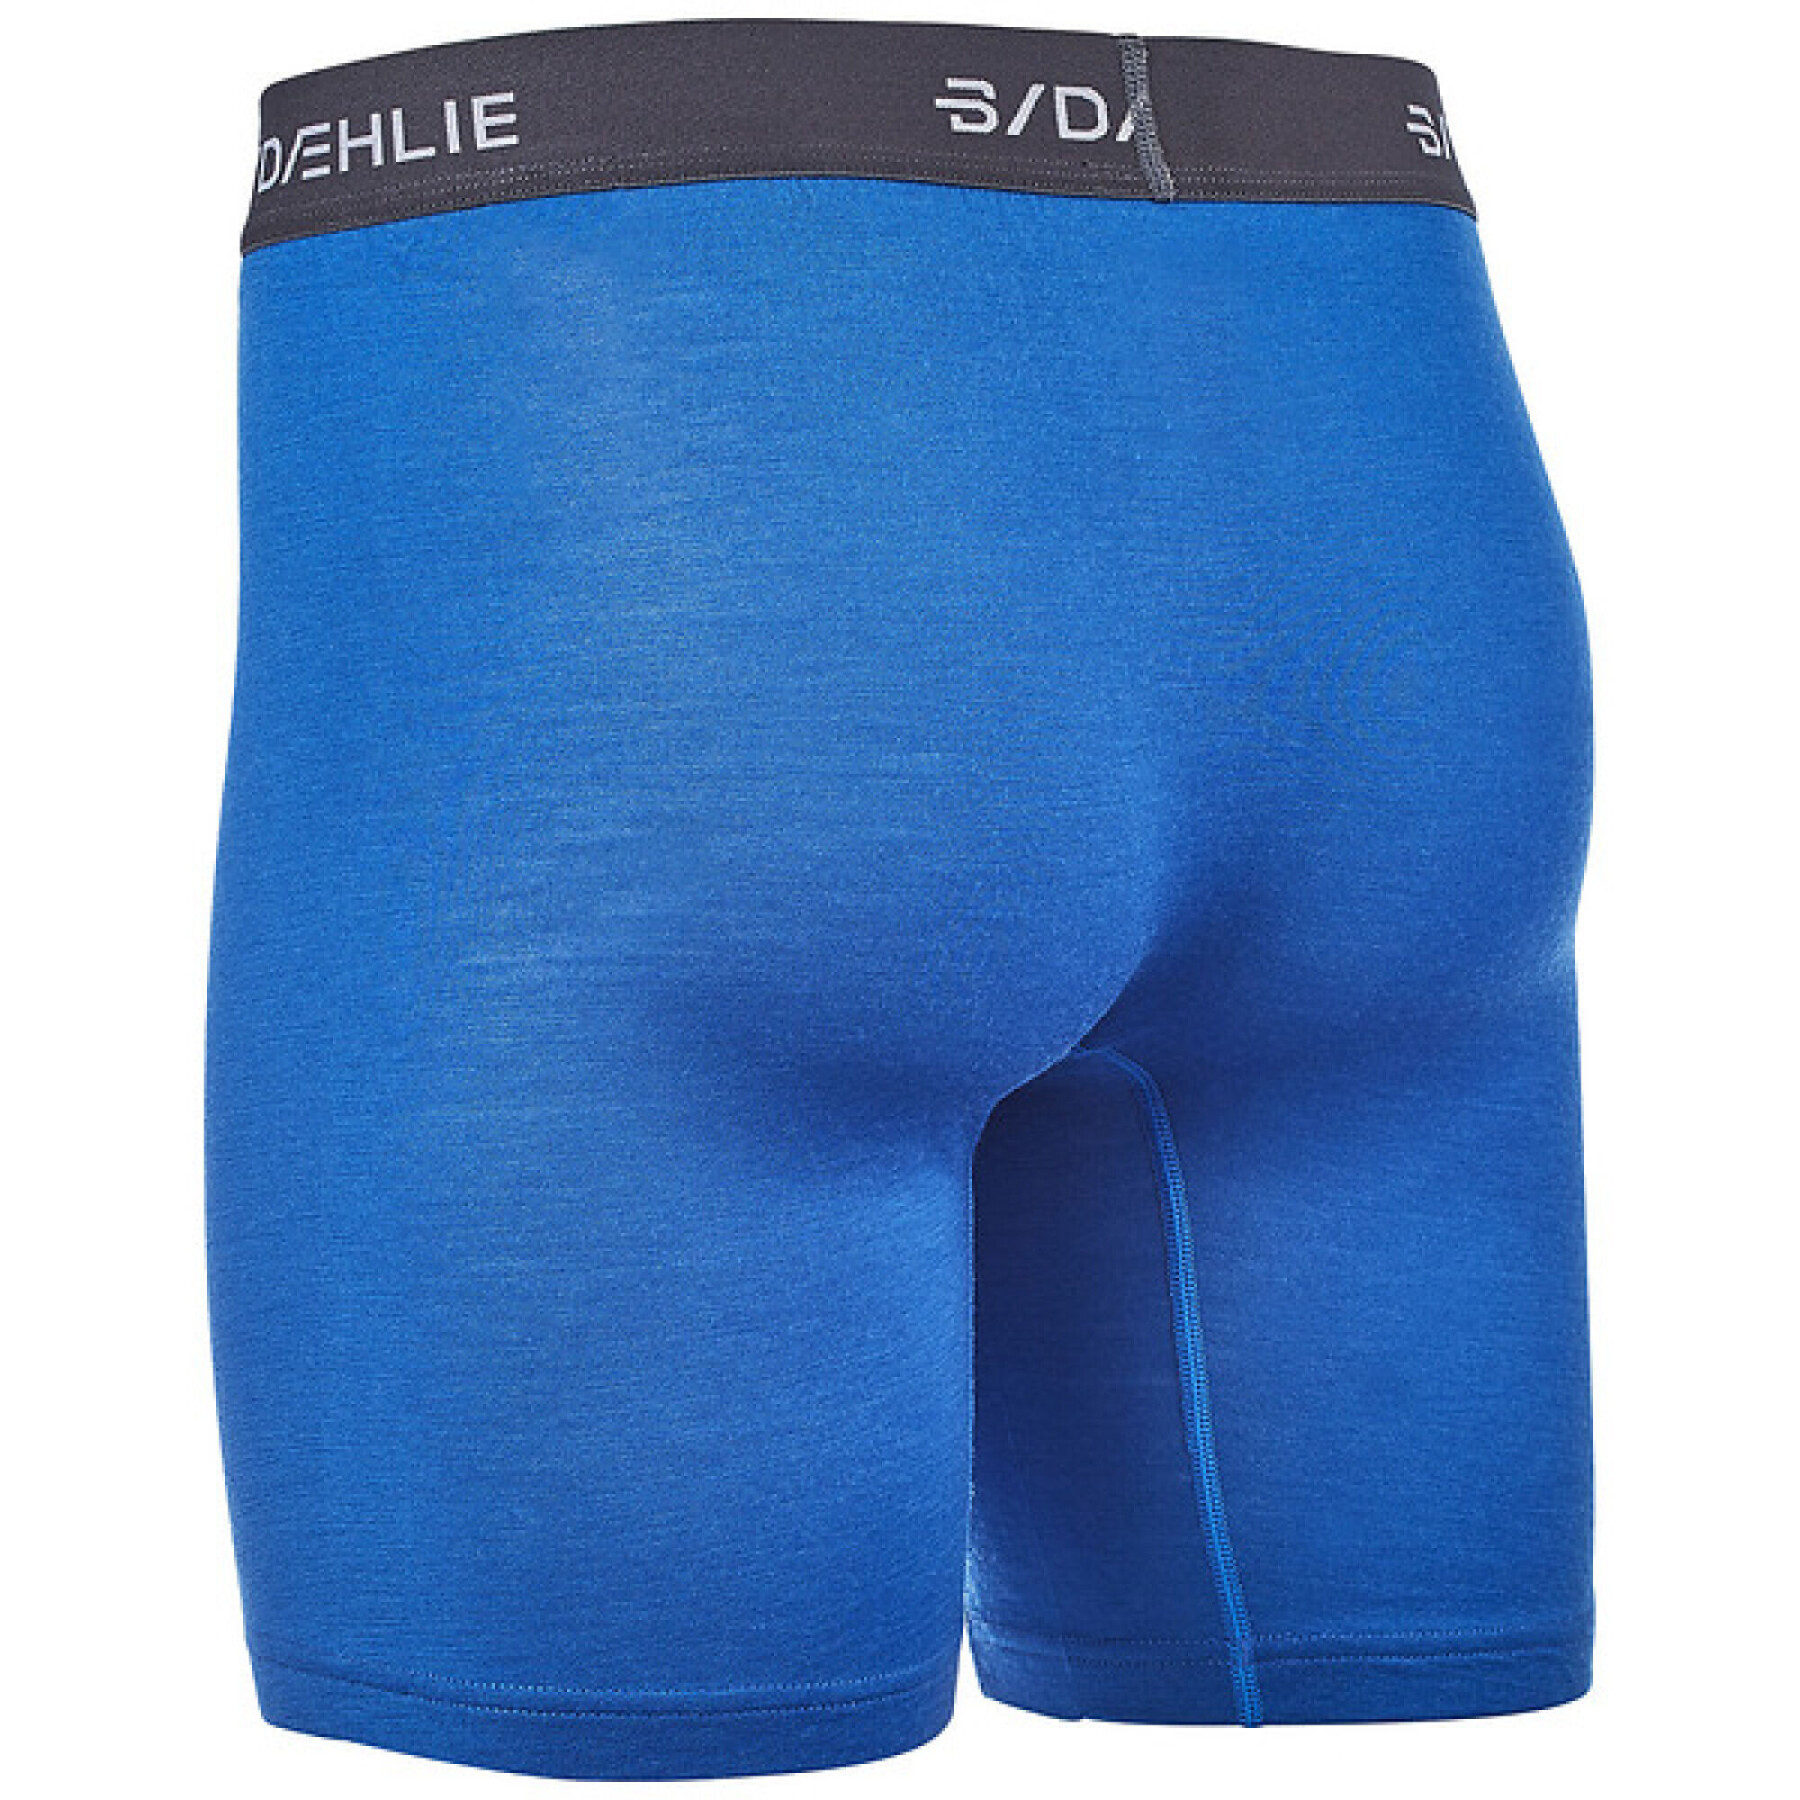 Wool boxer shorts Daehlie Sportswear